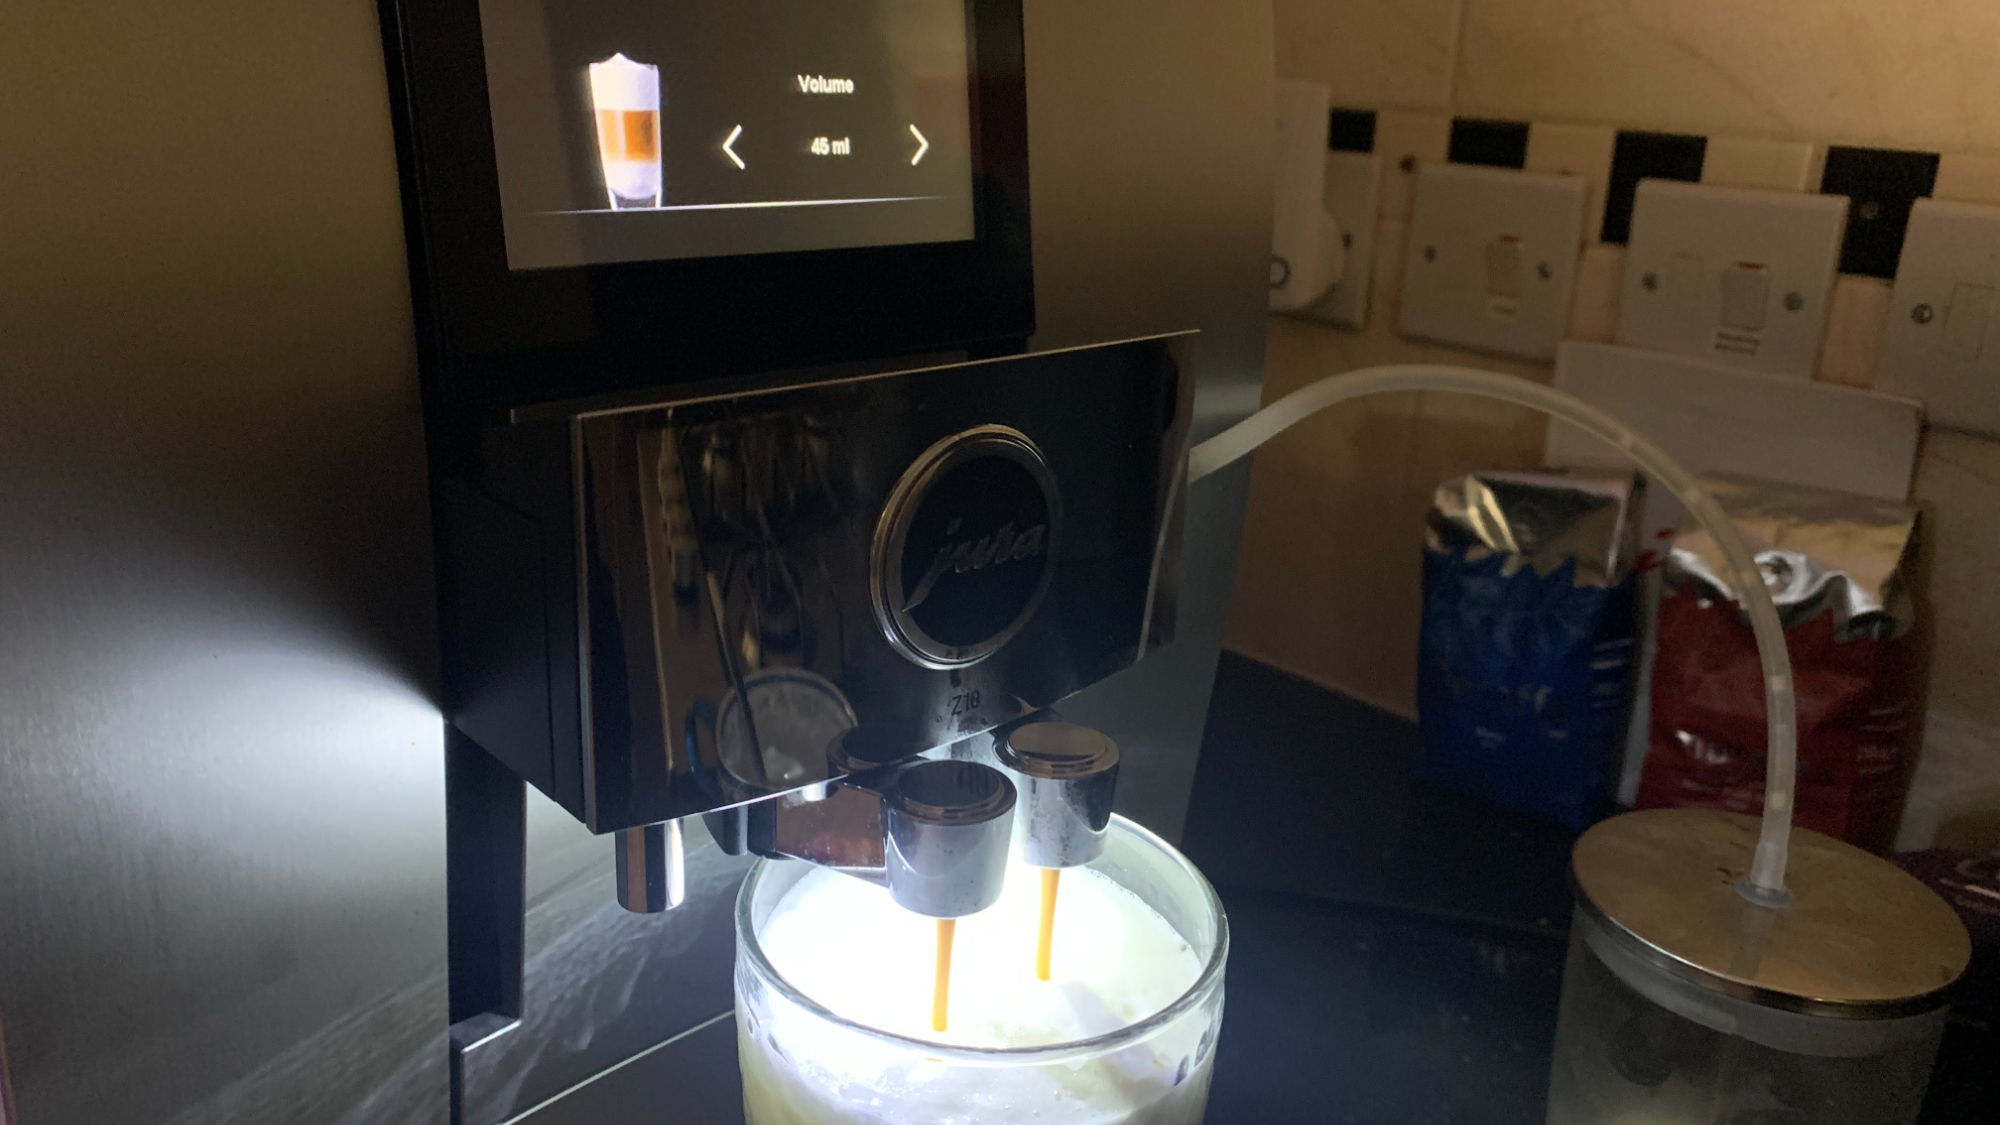 The Jura Z10 making an iced latte